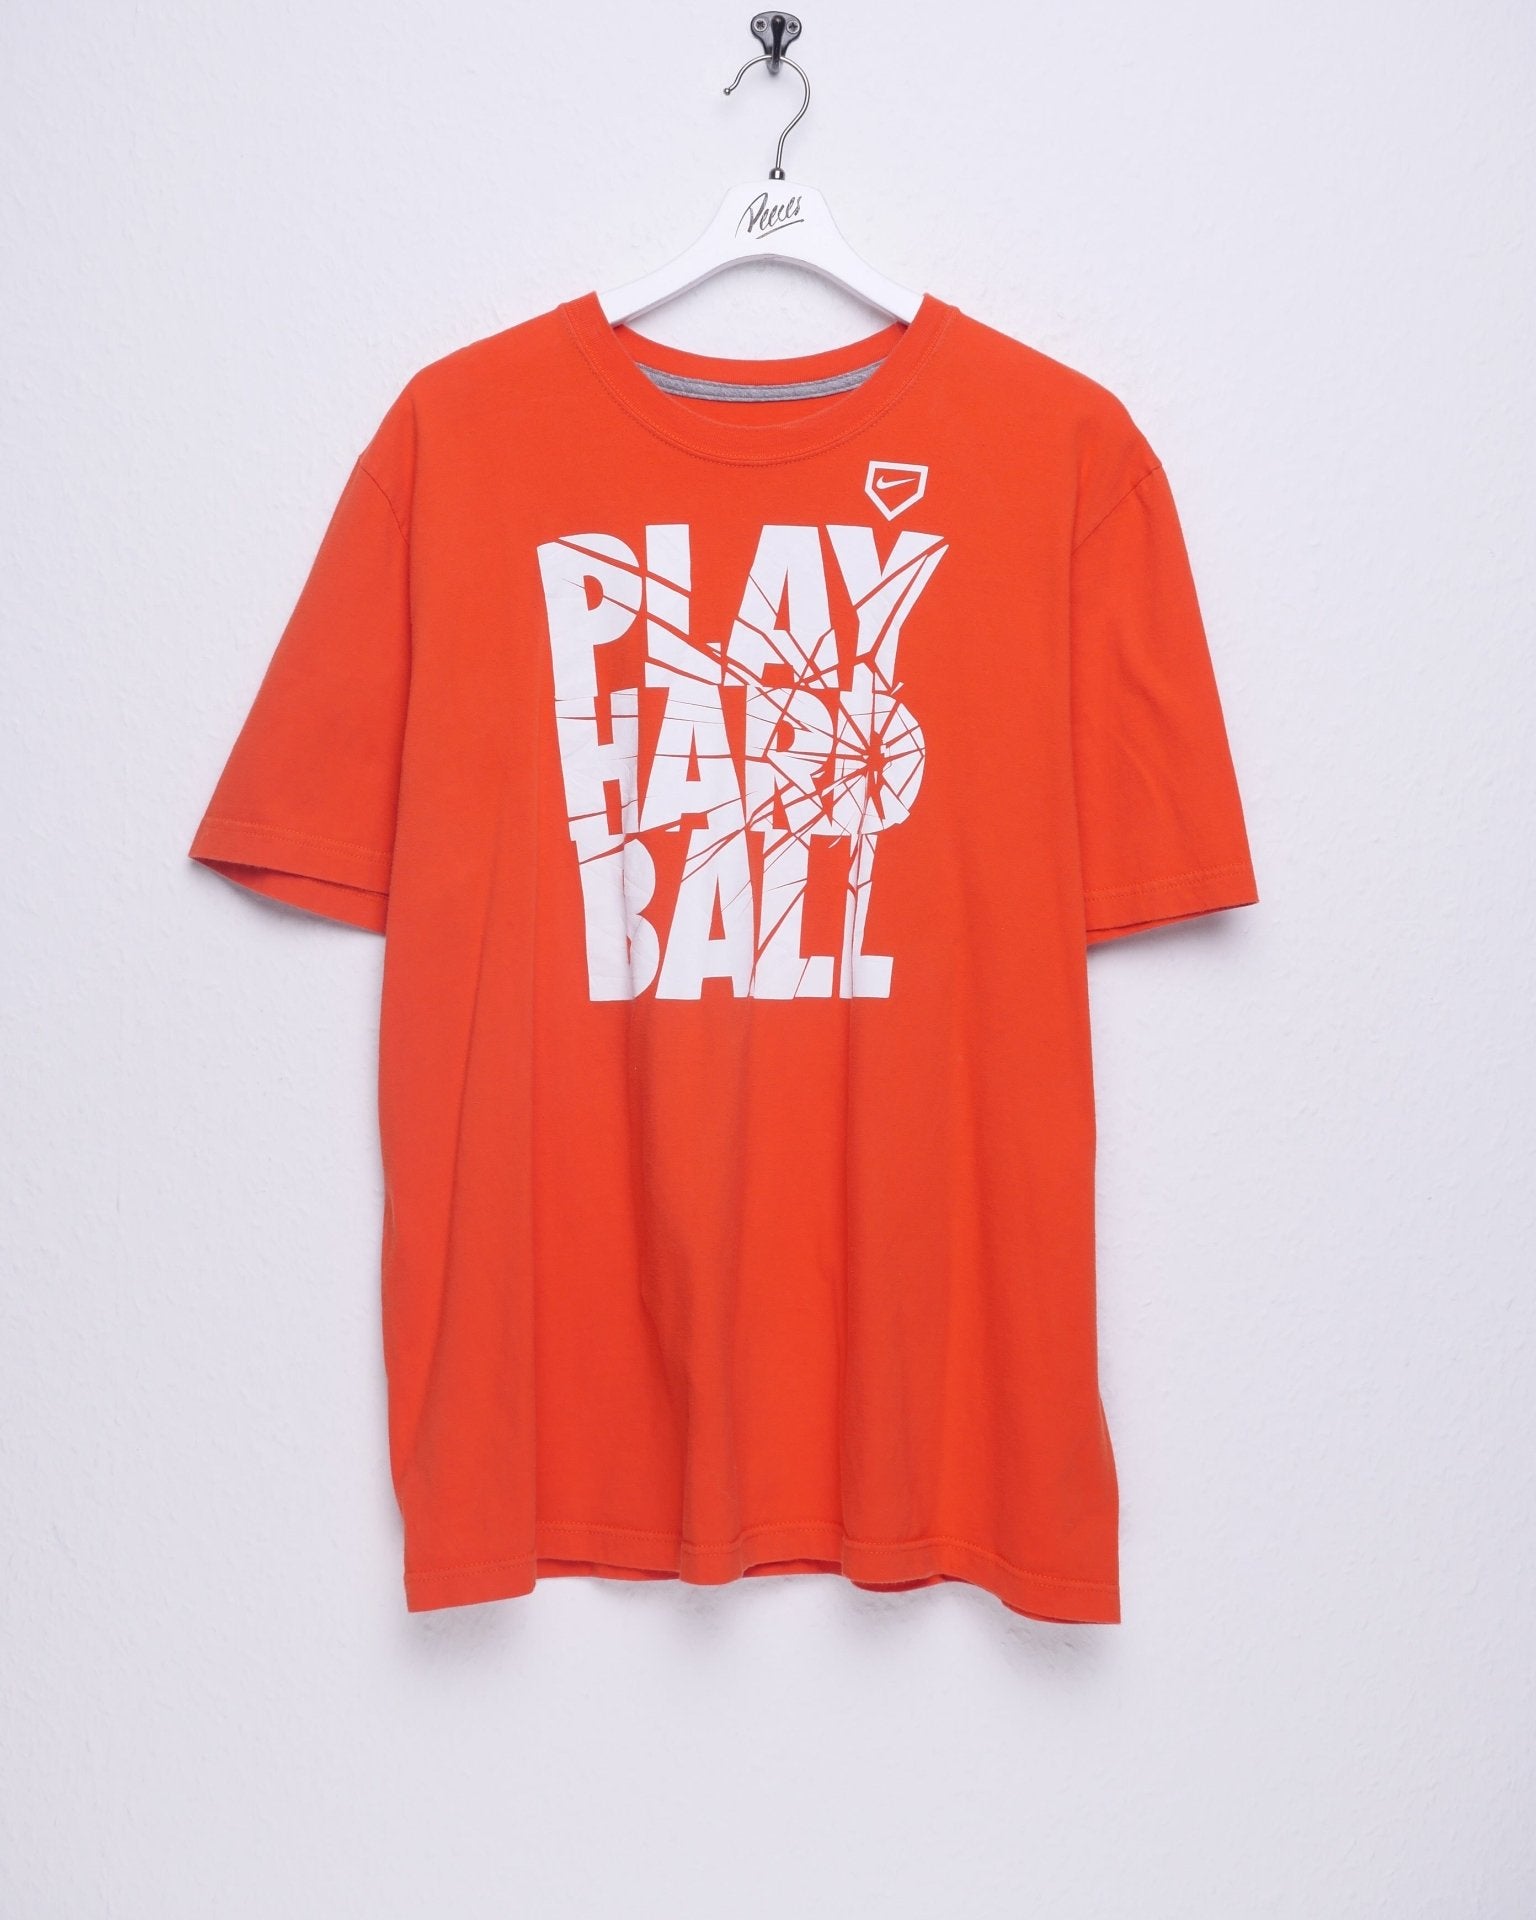 nike Play Hard Ball printed Swoosh orange Shirt - Peeces